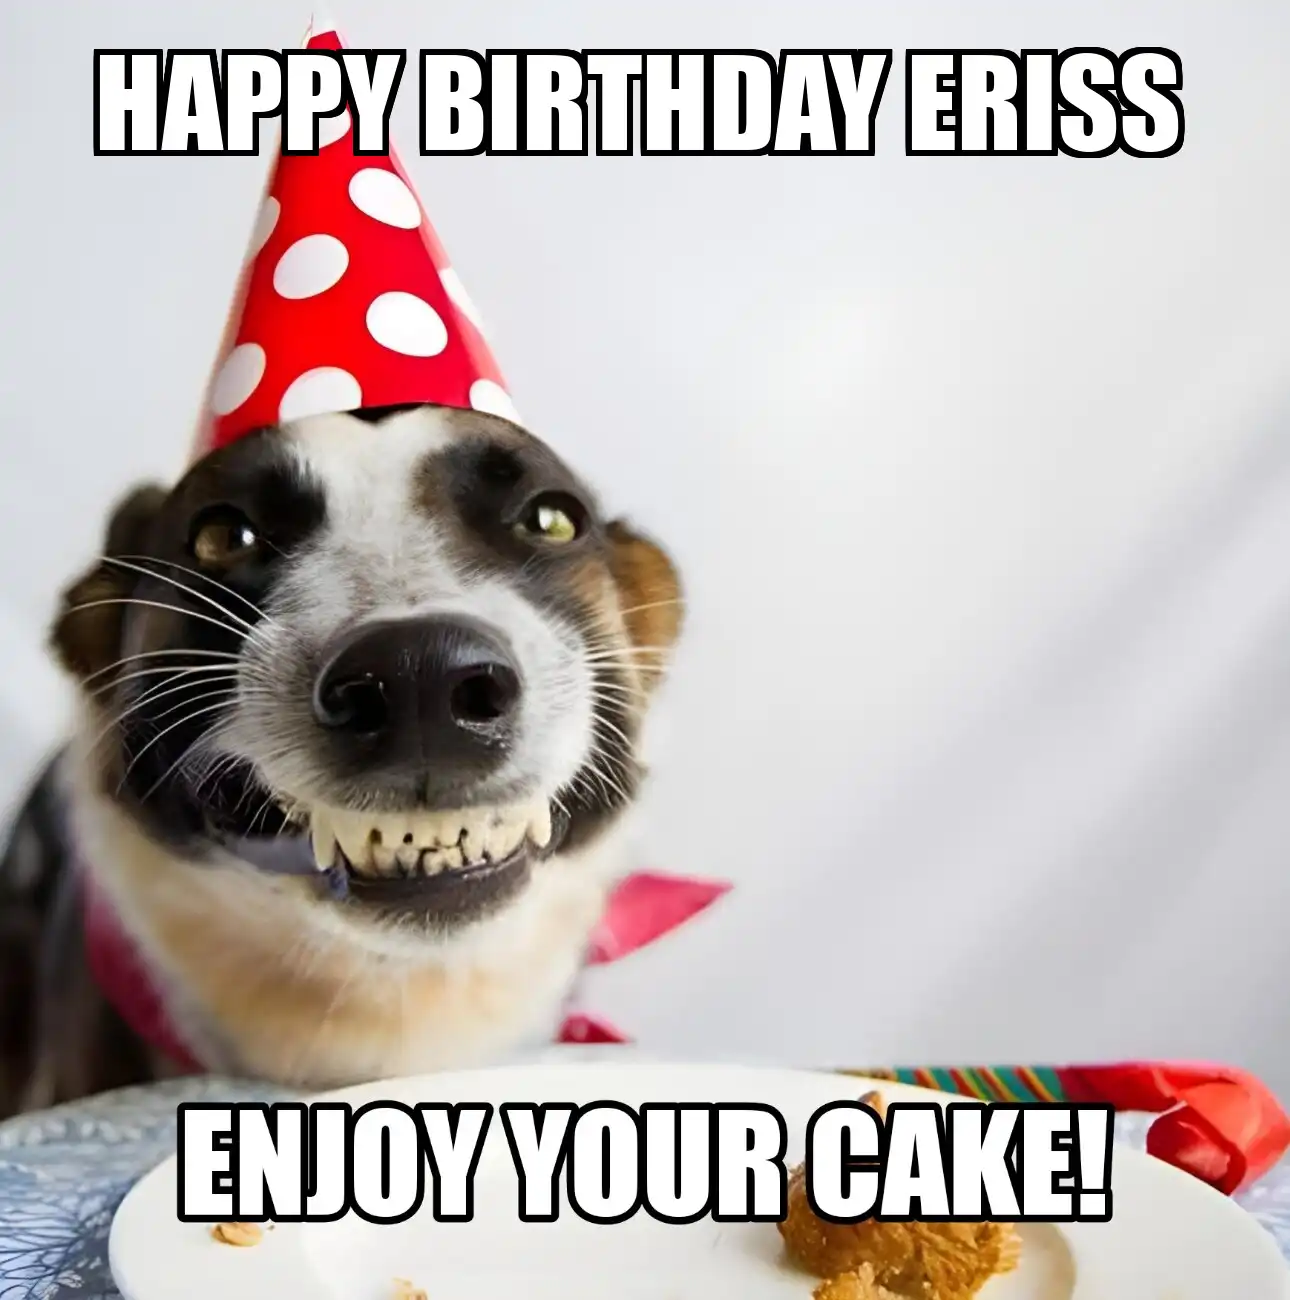 Happy Birthday Eriss Enjoy Your Cake Dog Meme